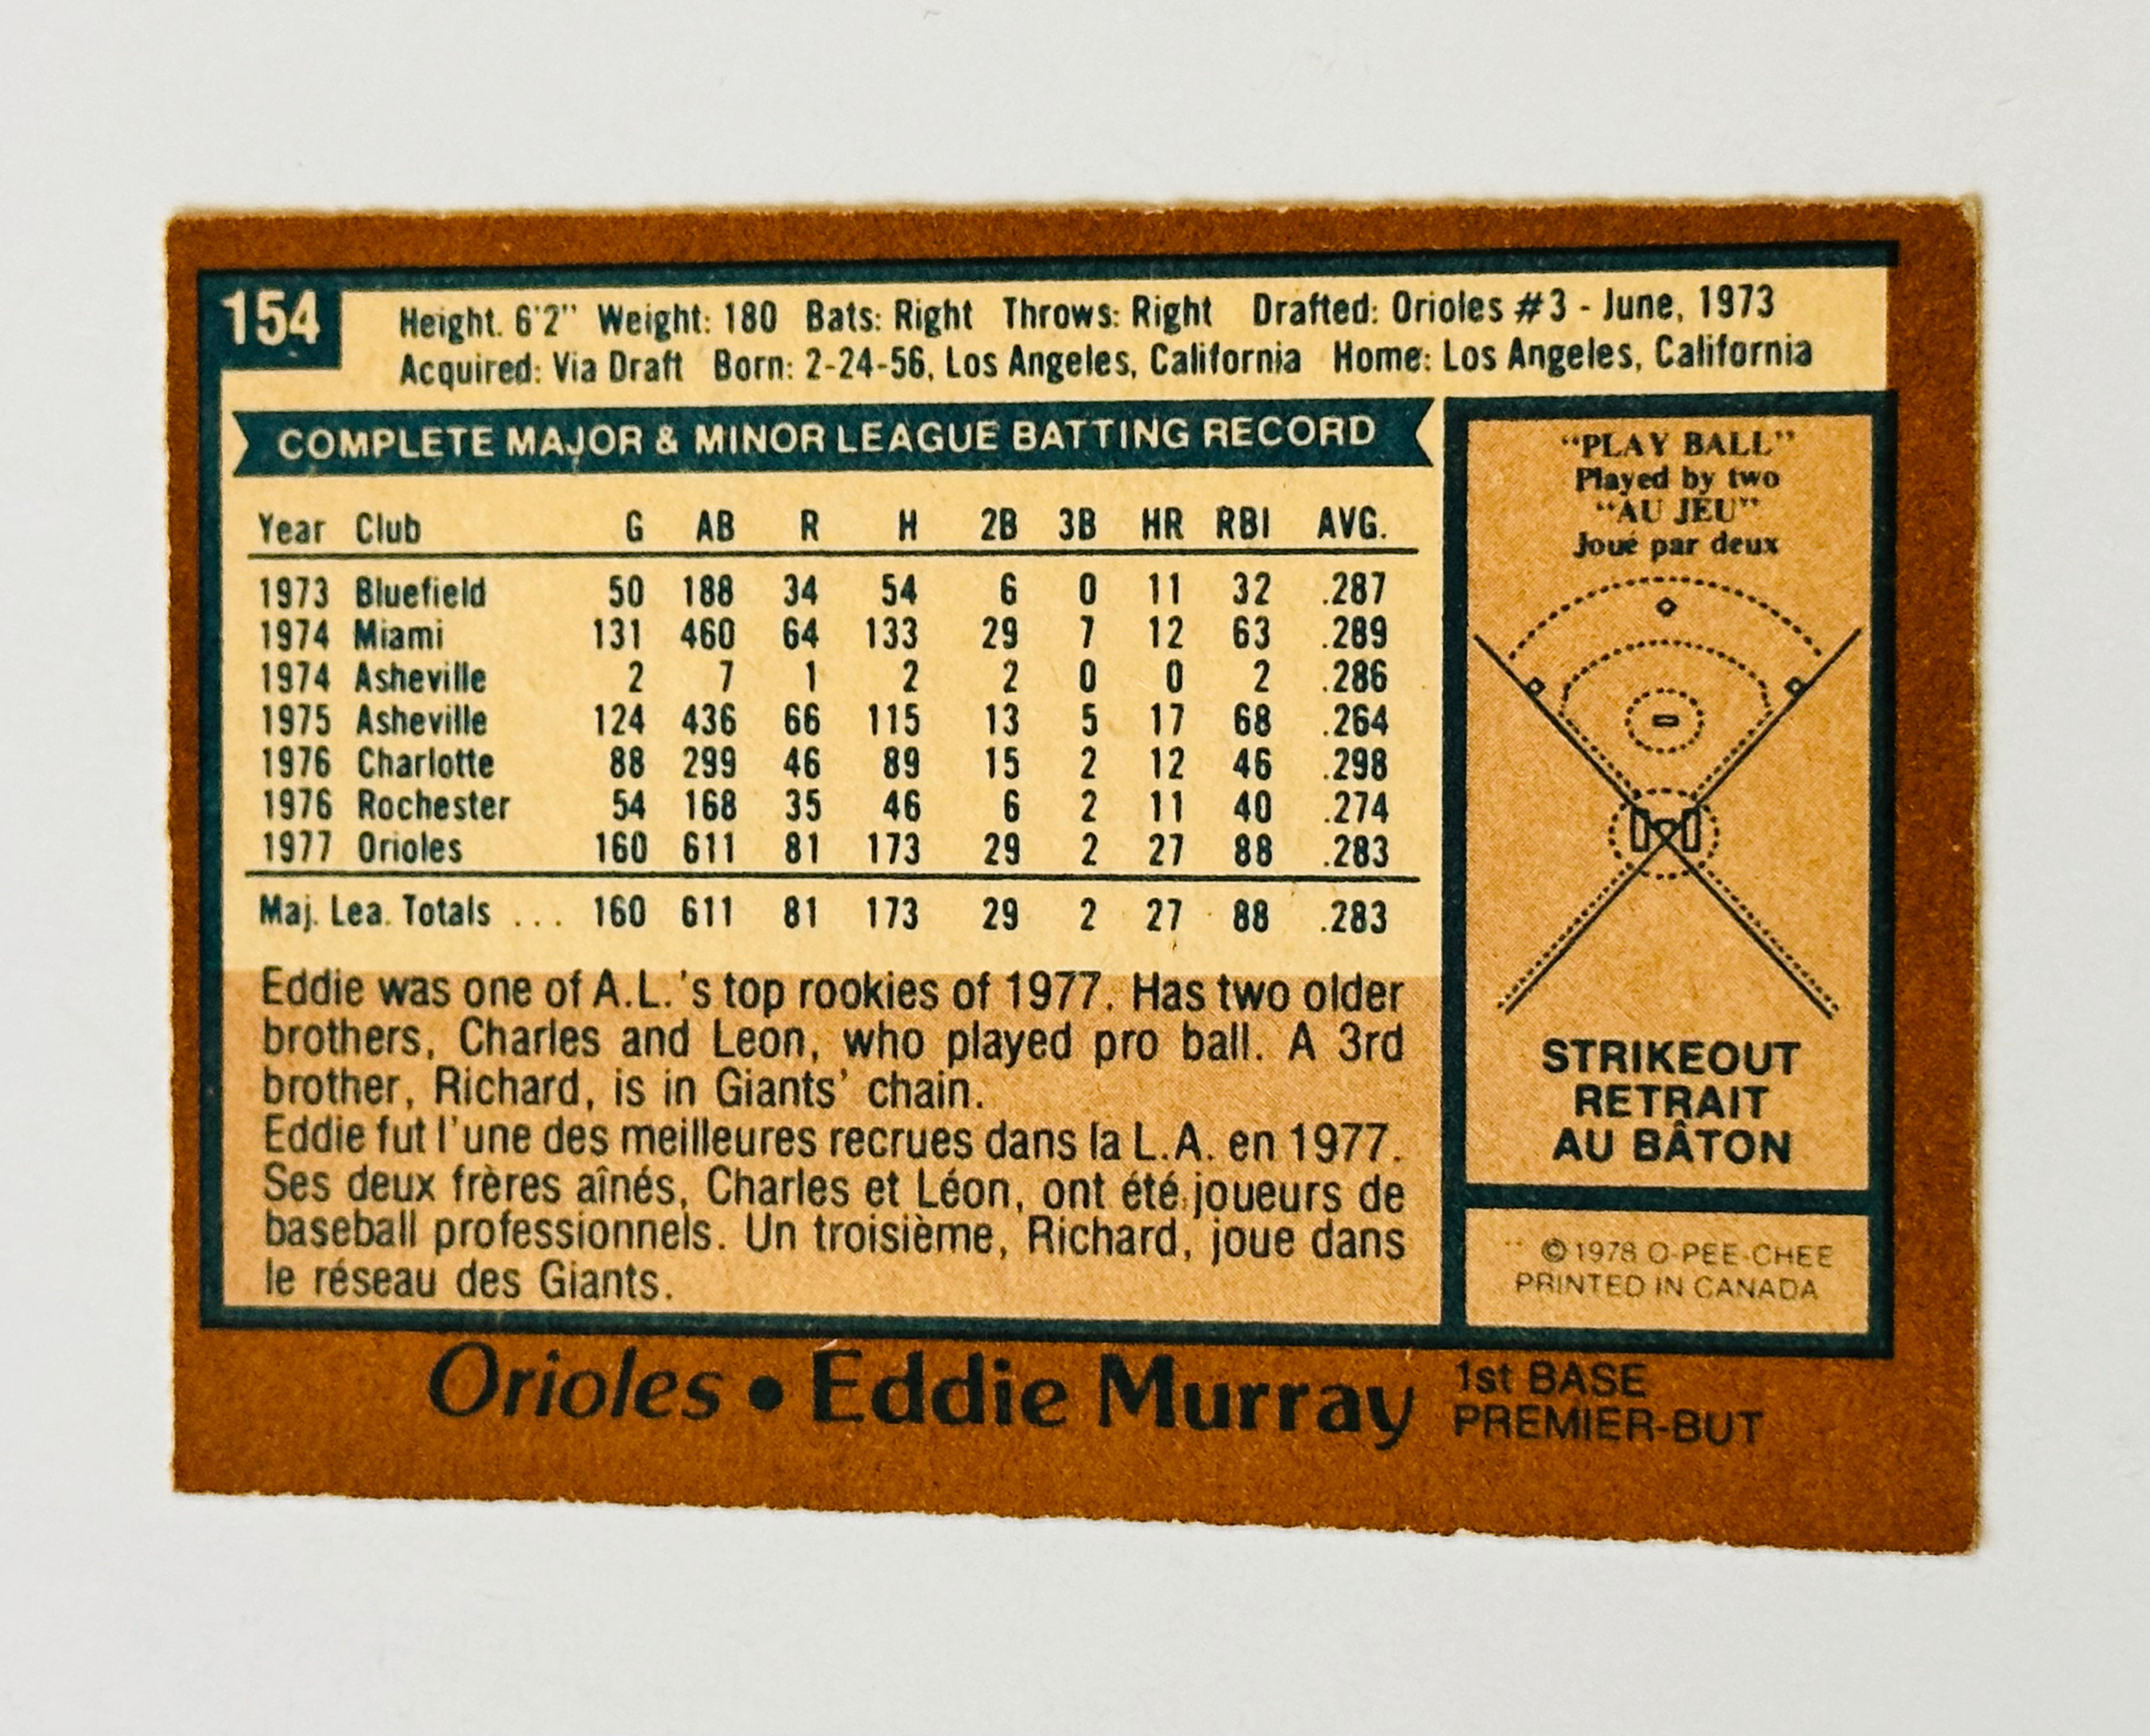 Eddie Murray Opc Canadian rarer version high grade baseball rookie card 1978